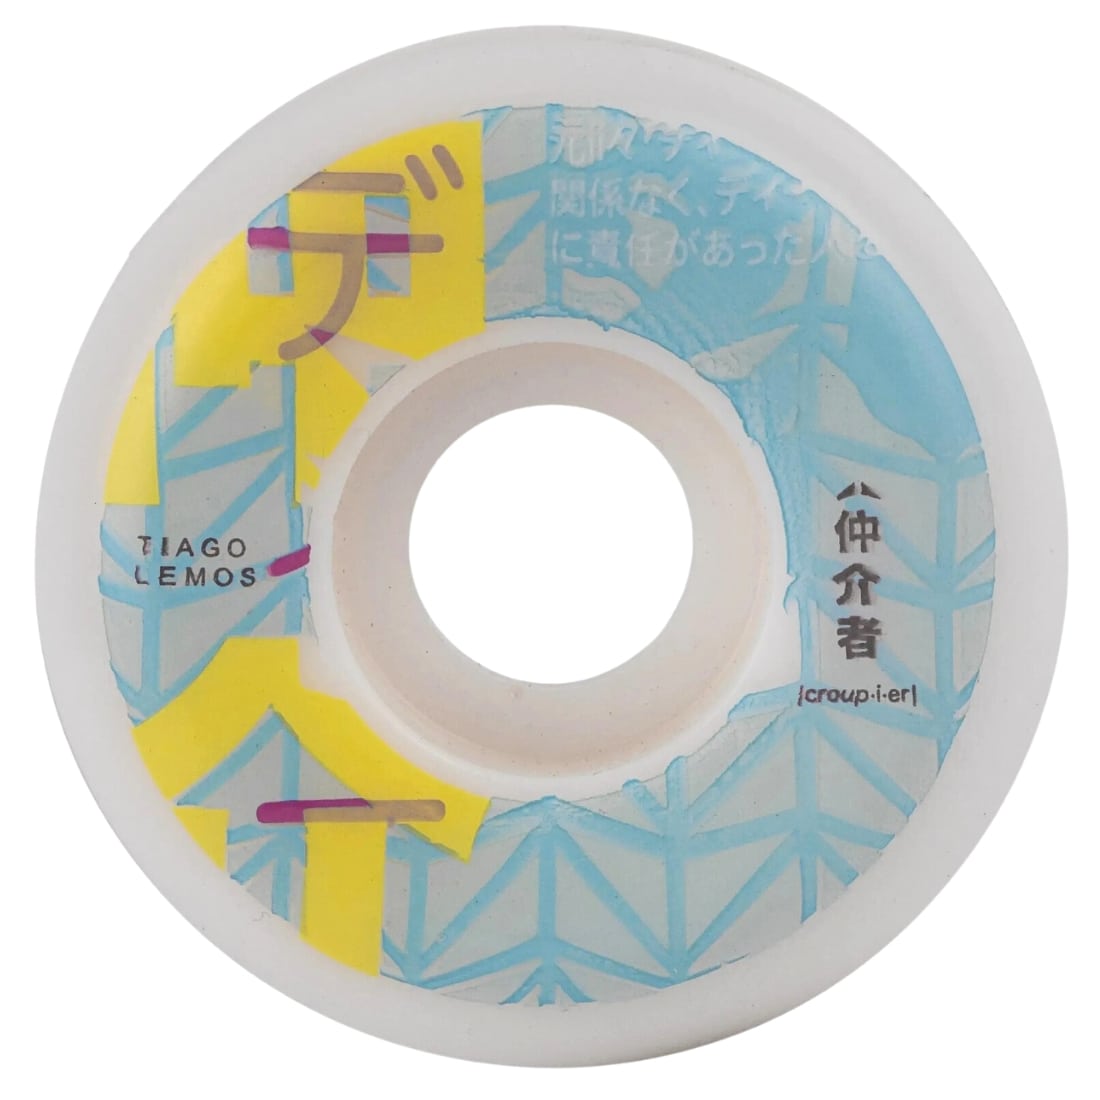 Crupie 51mm Japan Tiago Lemos Flatspot Resist Skateboard Wheels - Blue - Skateboard Wheels by Crupie 51mm